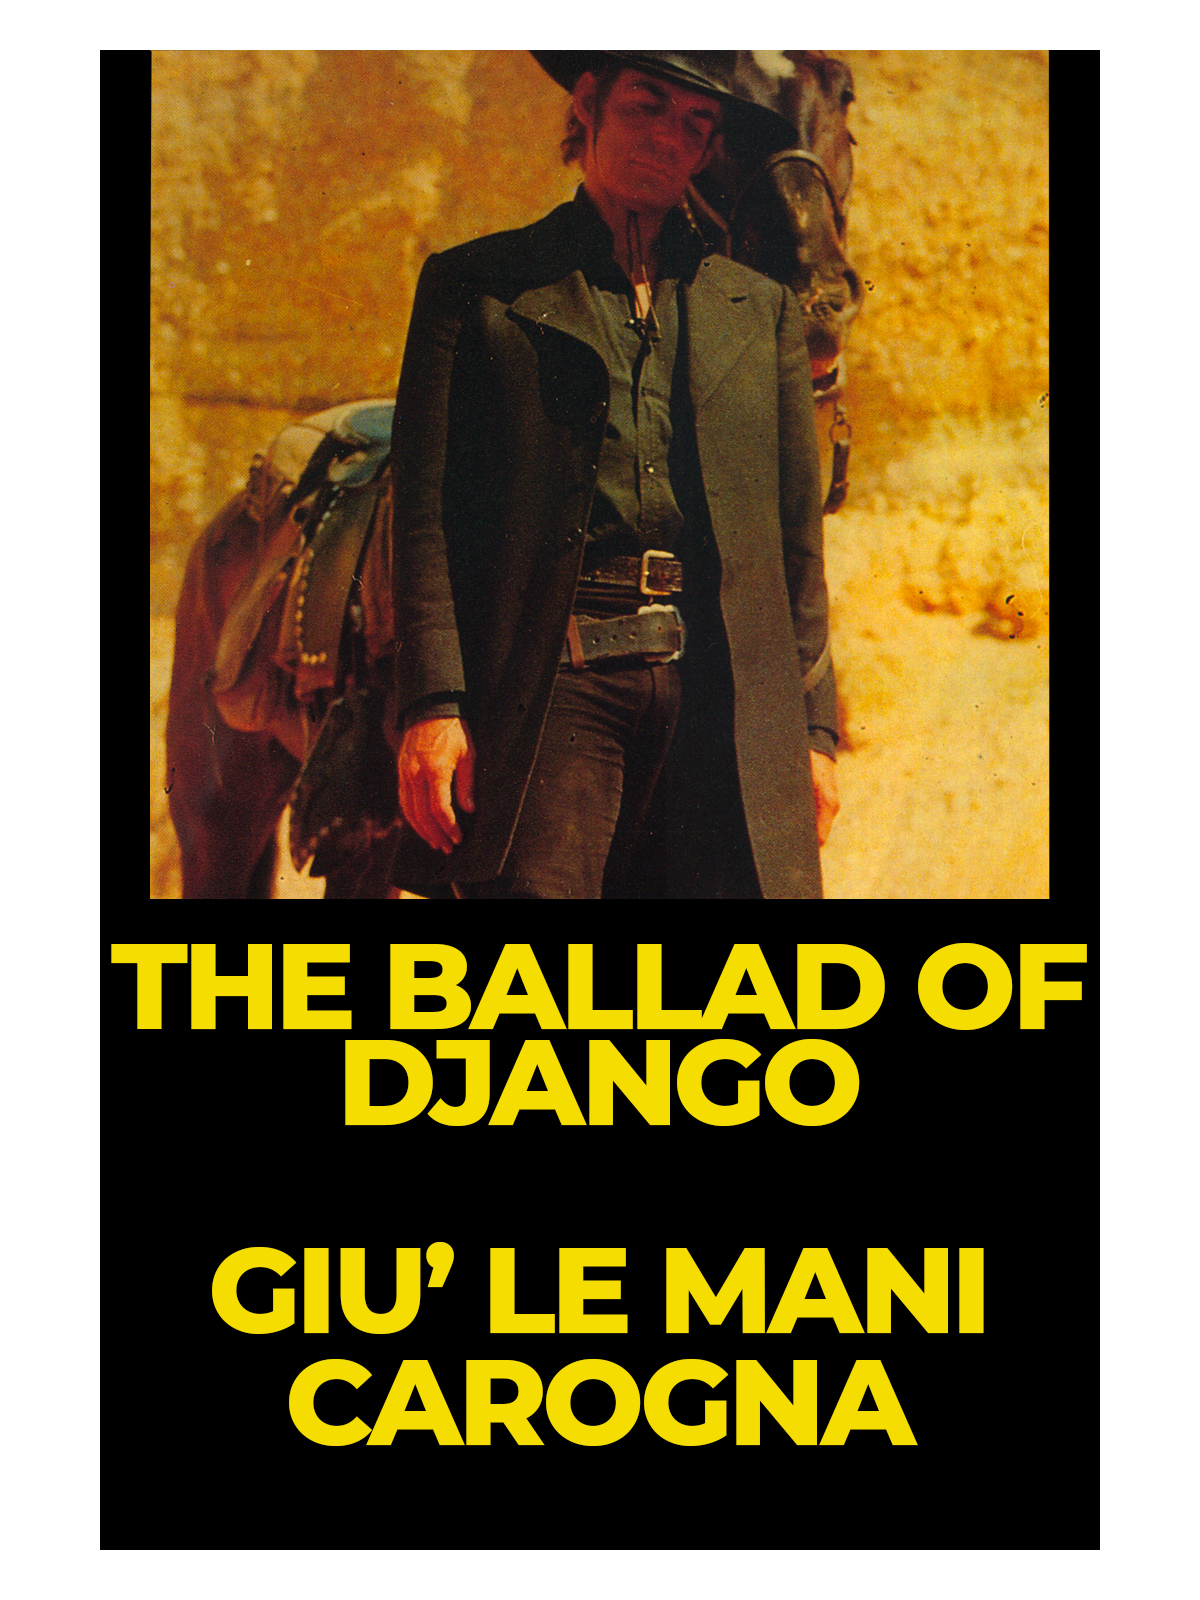 The Django Story